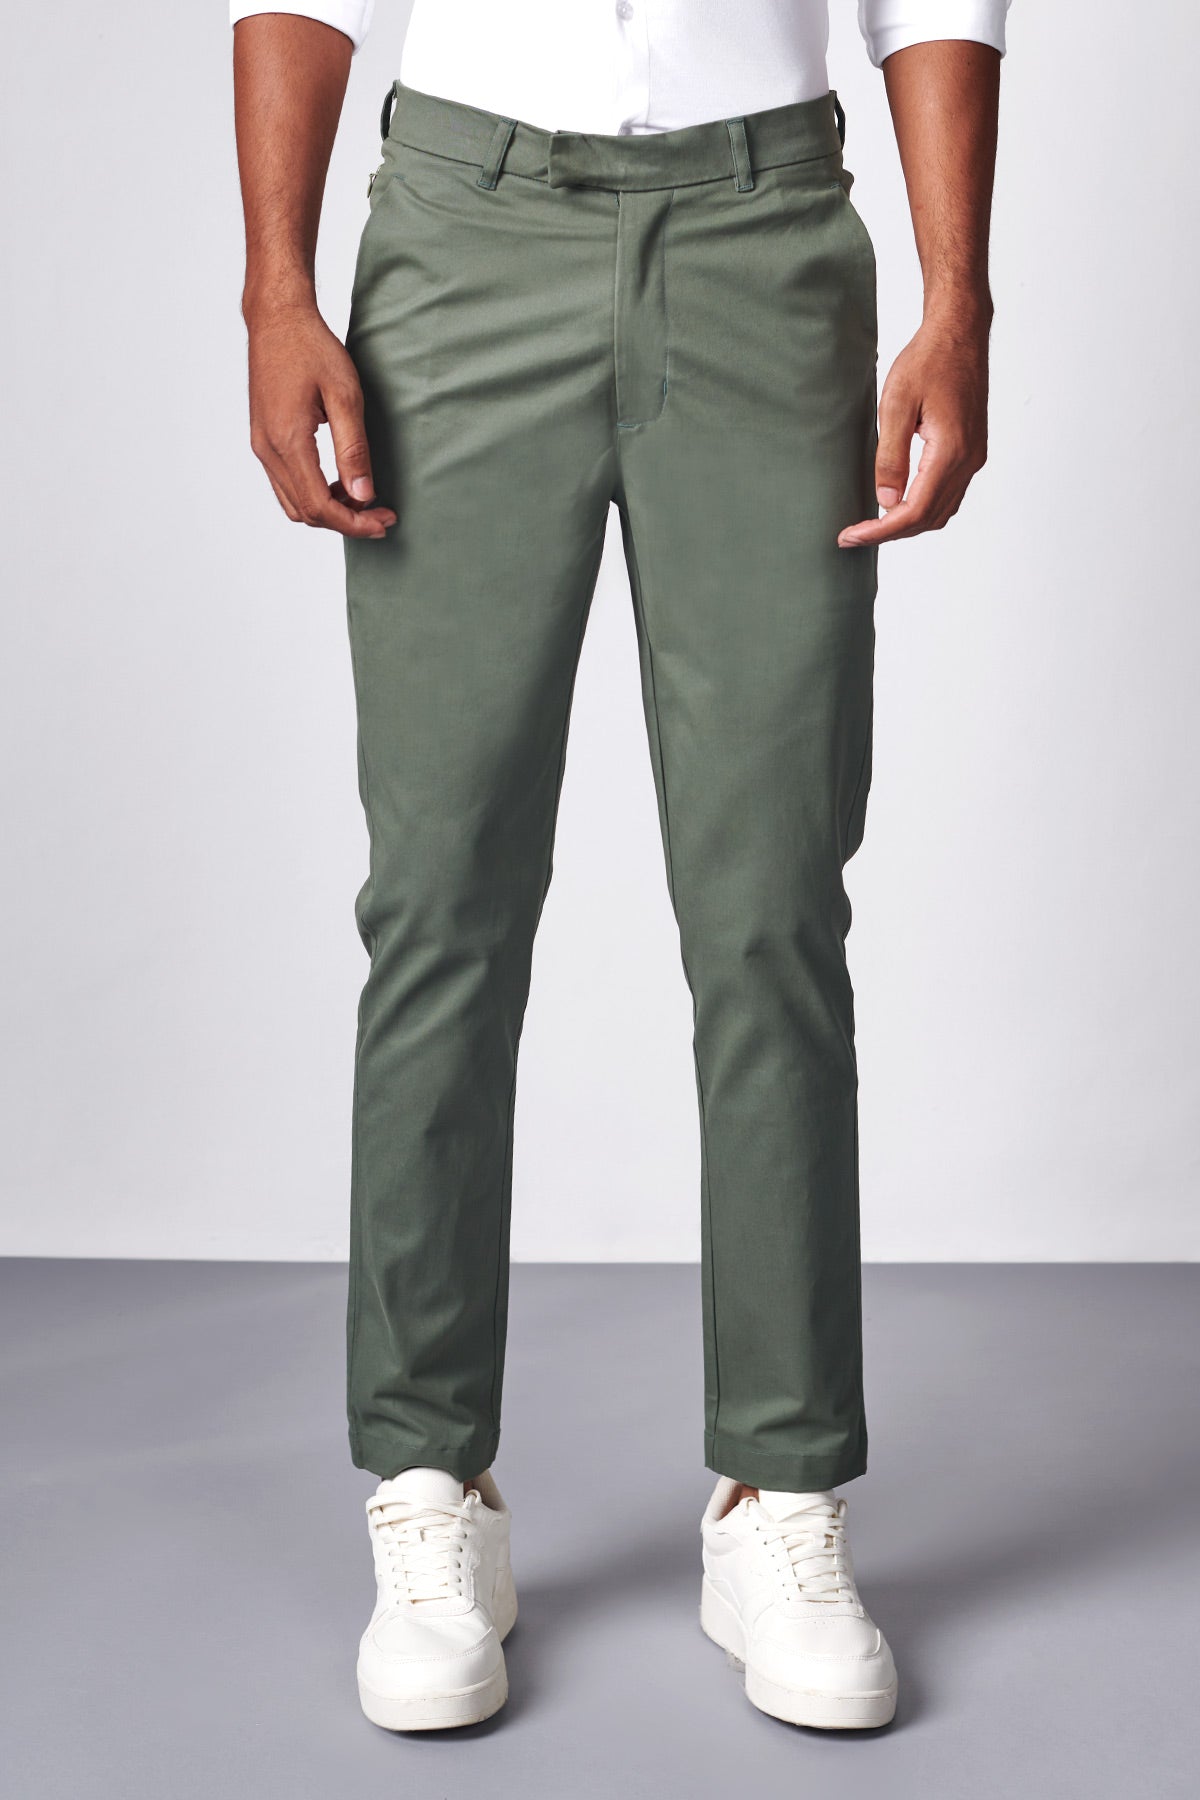 The 24 Fern Green Trouser